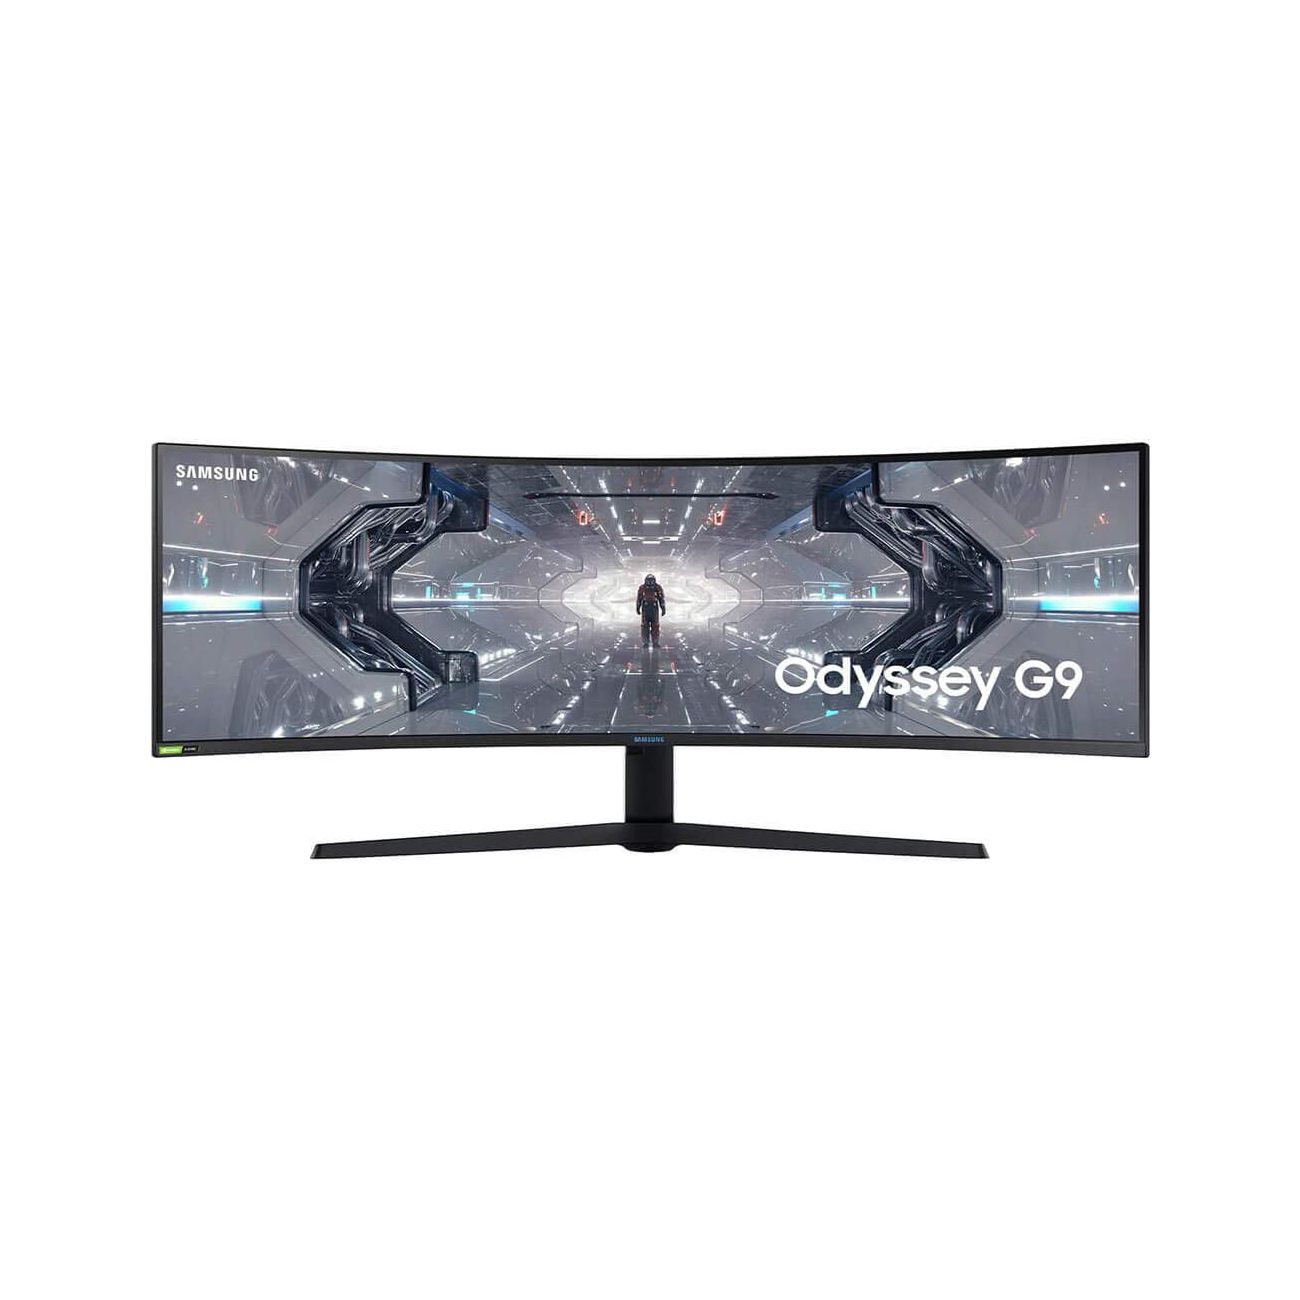 Samsung 49-inch Odyssey G9 Gaming Monitor 01